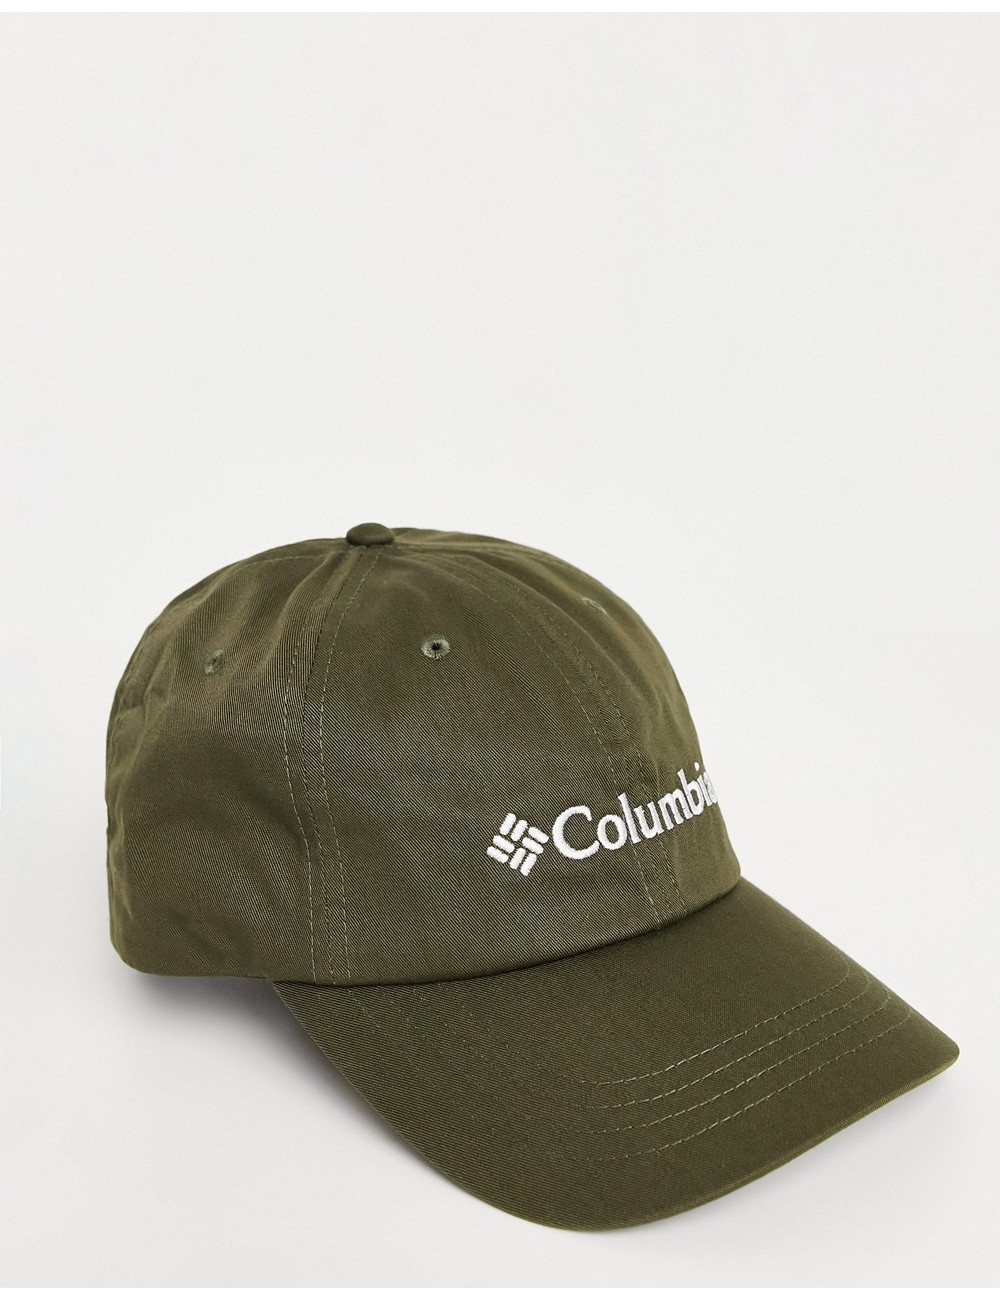 Columbia ROC cap in khaki